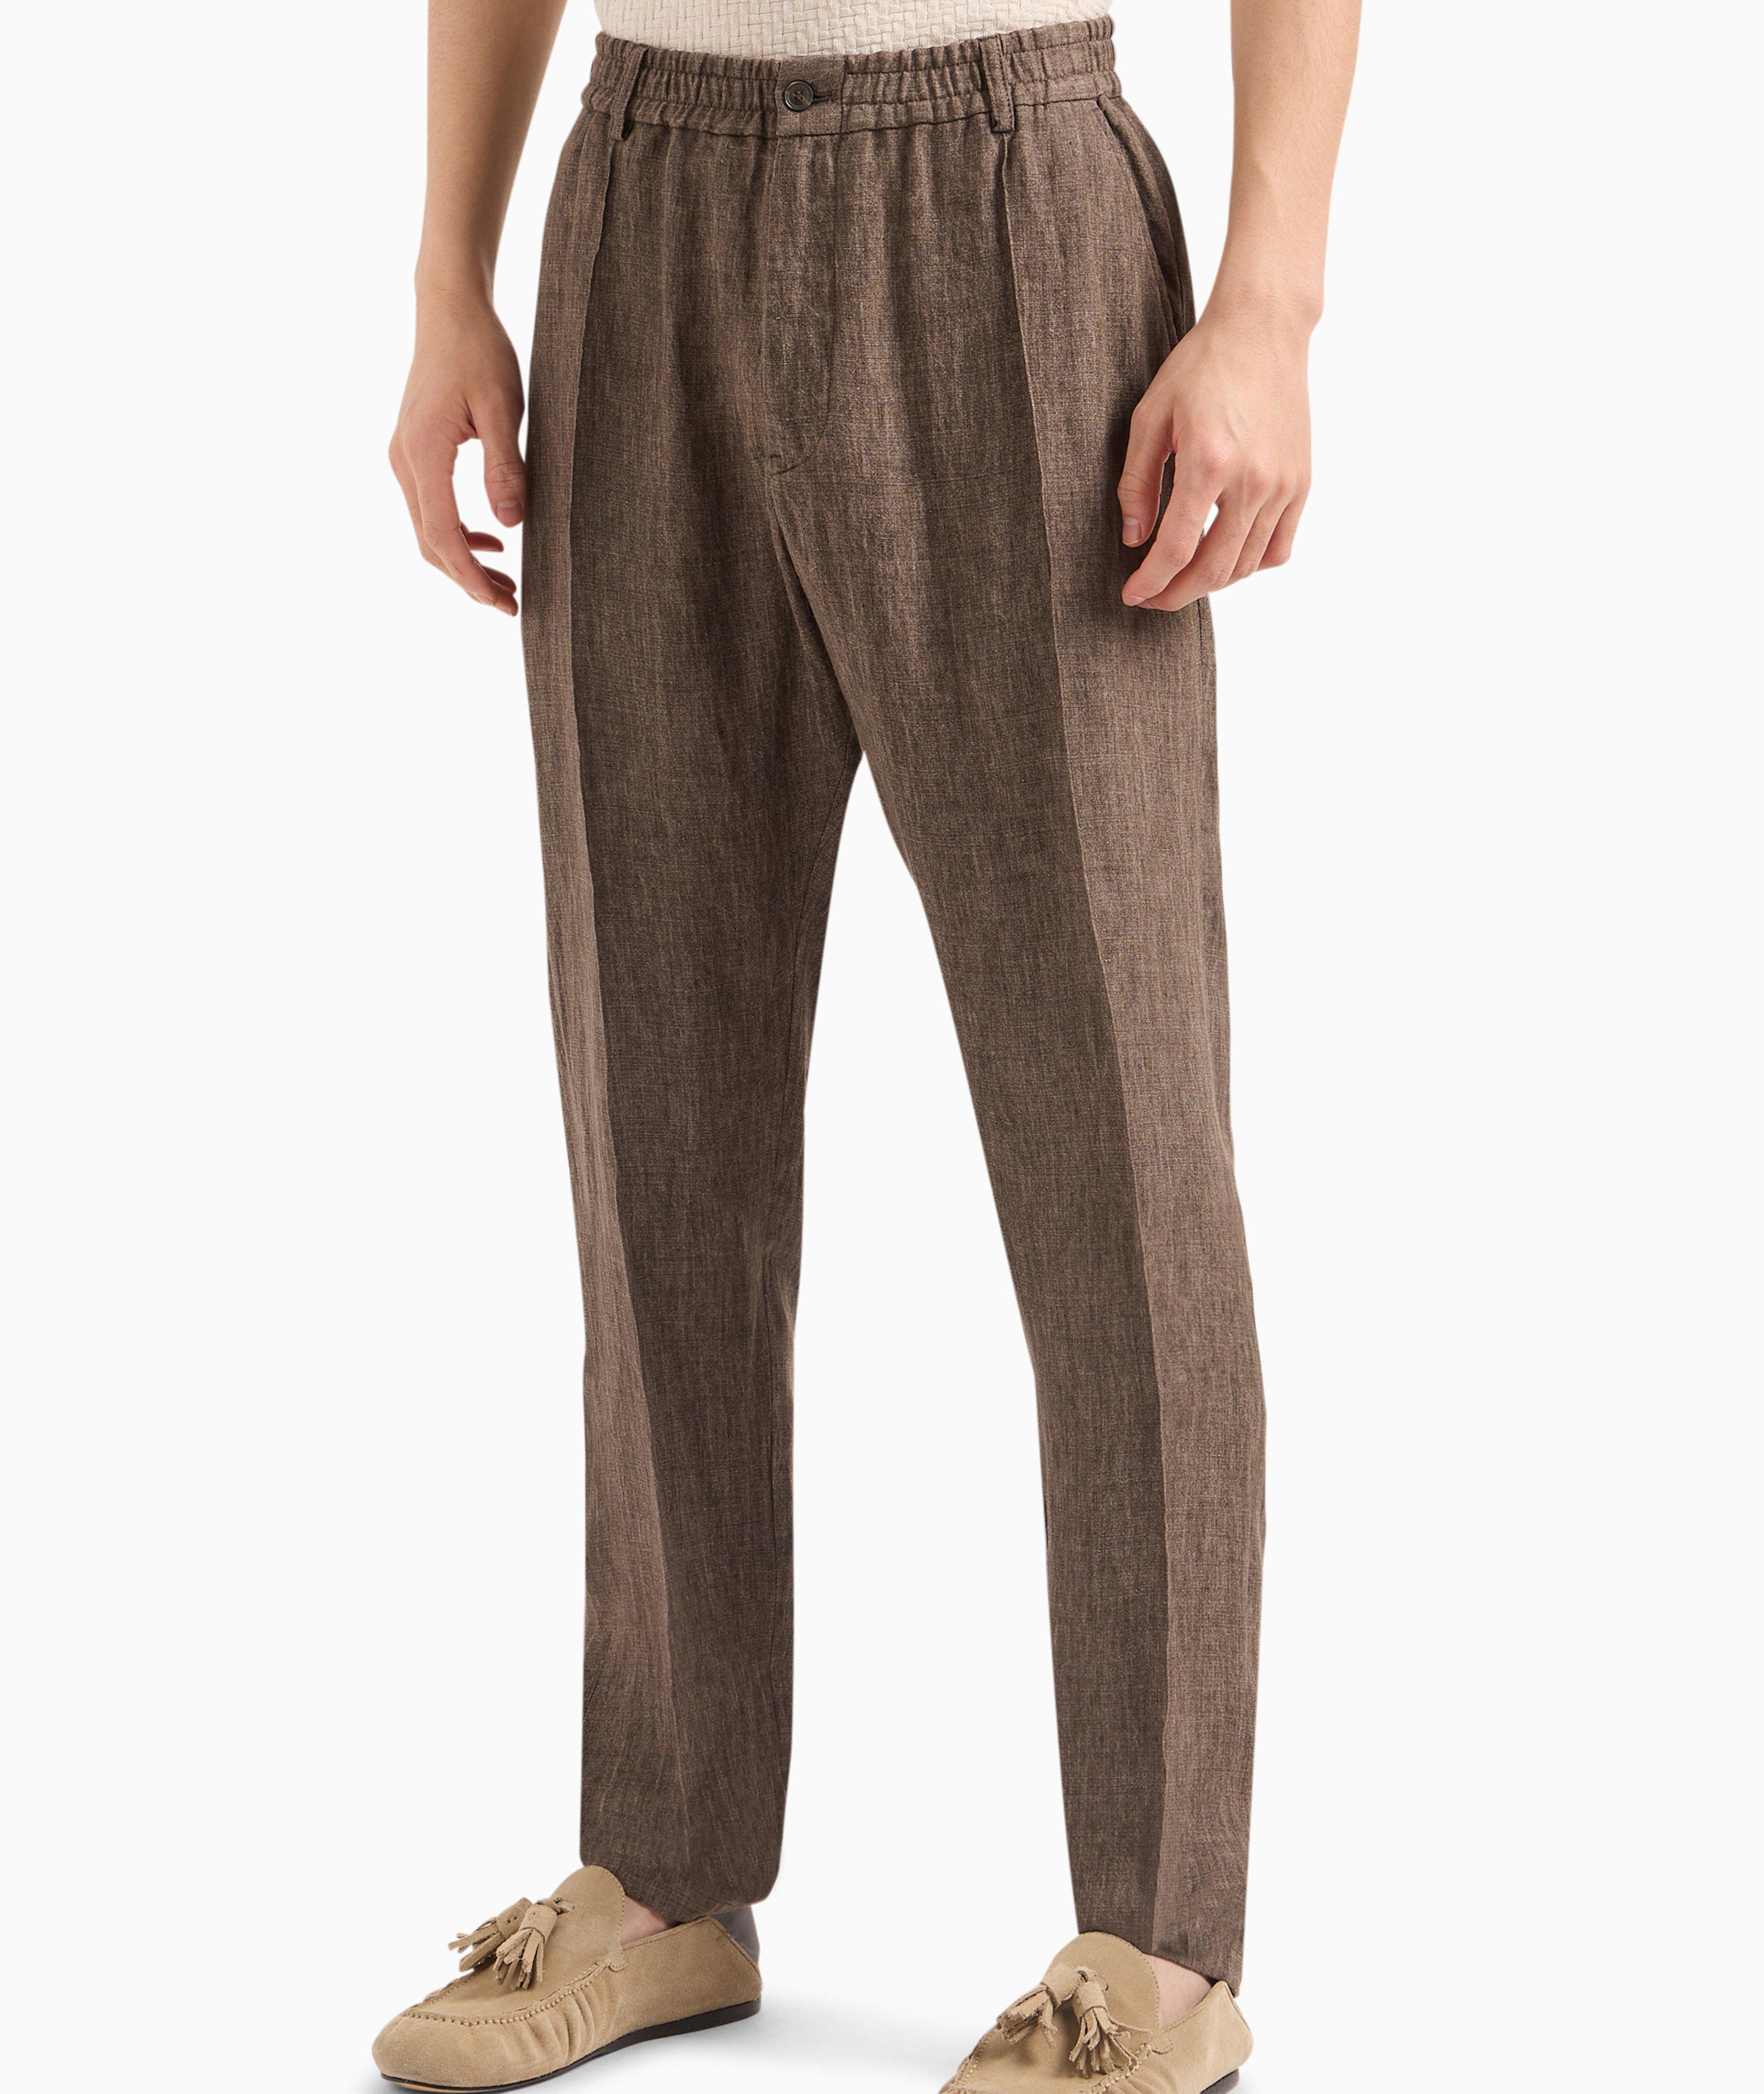 Pantalon en crêpe de lin délavé image 1